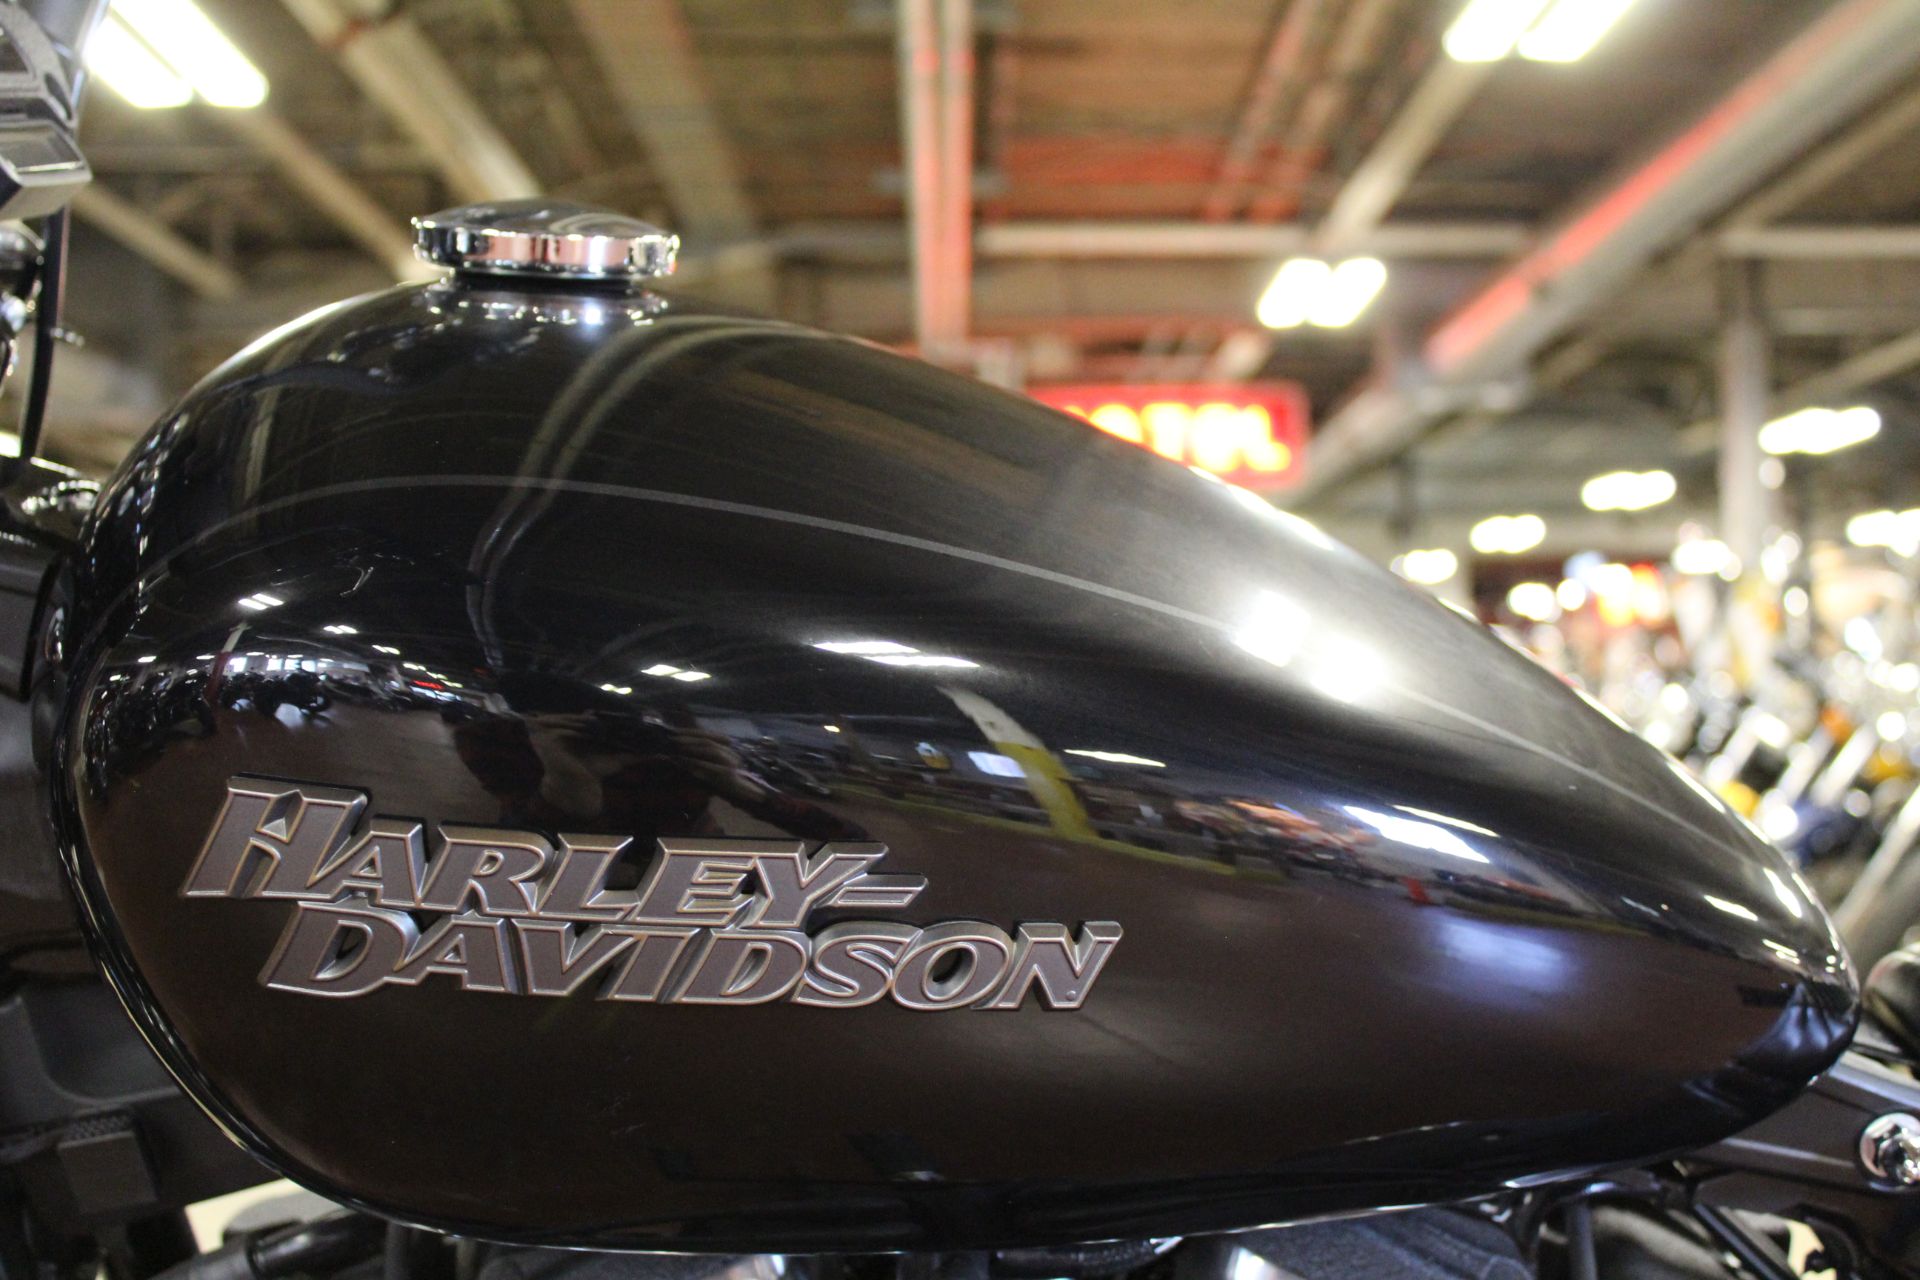 2020 Harley-Davidson Street Bob® in New London, Connecticut - Photo 11